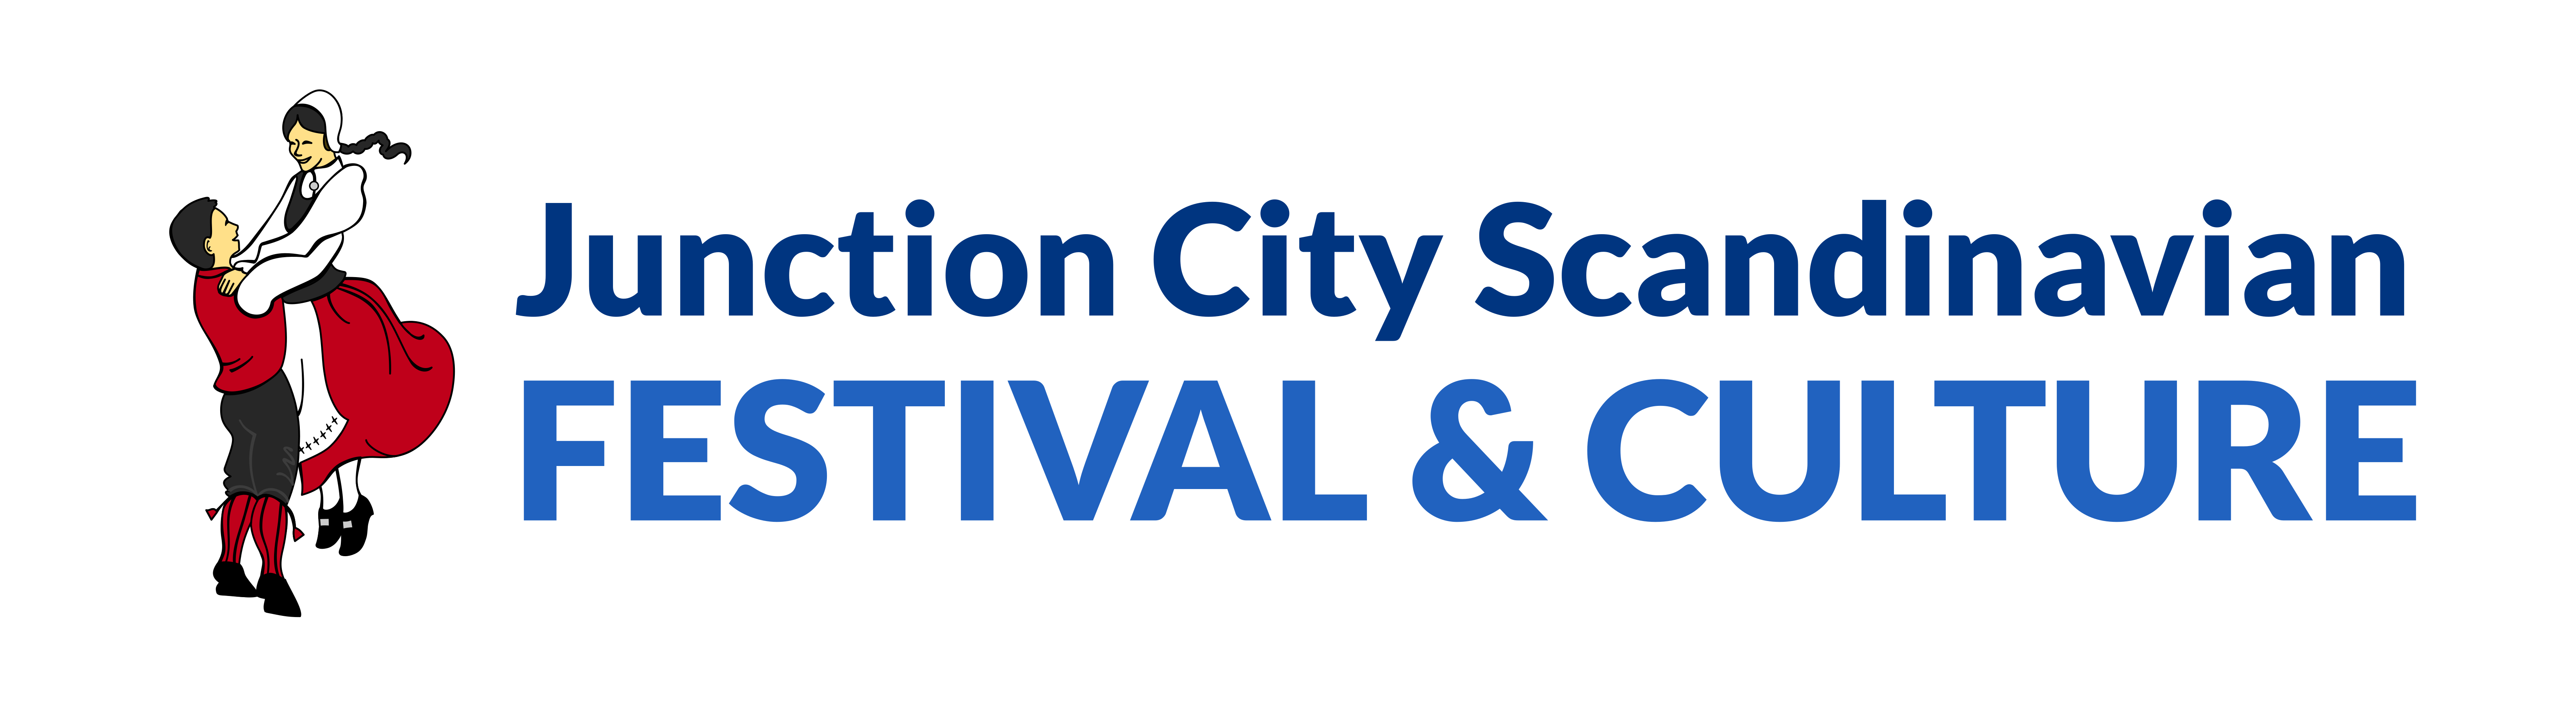 Scandinavian Festival & Culture Of Junction City, Oregon